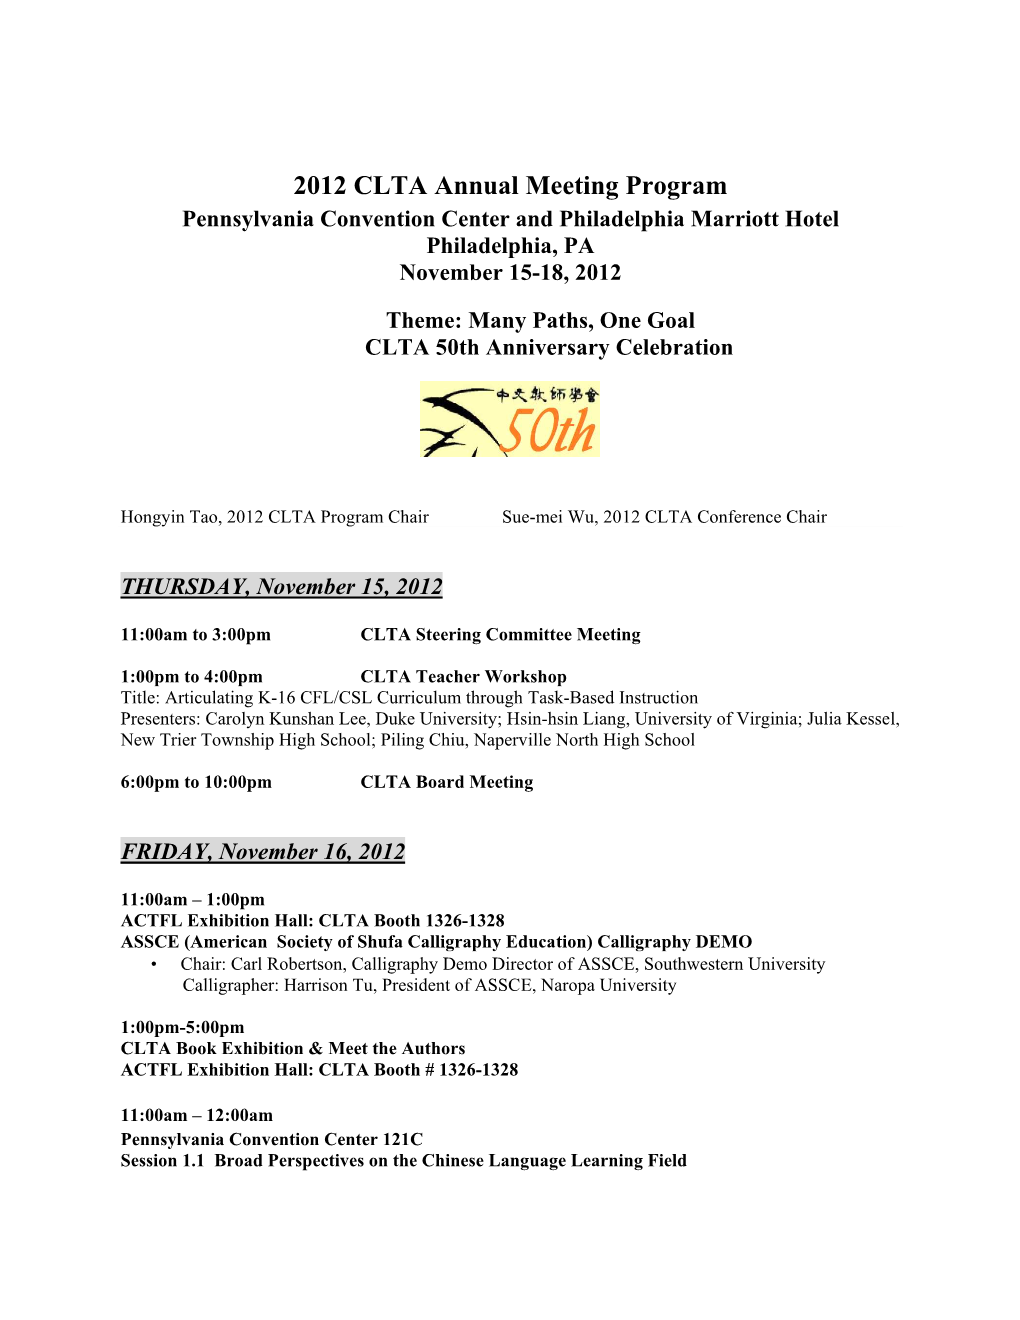 2012 CLTA Annual Meeting Program Pennsylvania Convention Center and Philadelphia Marriott Hotel Philadelphia, PA November 15-18, 2012